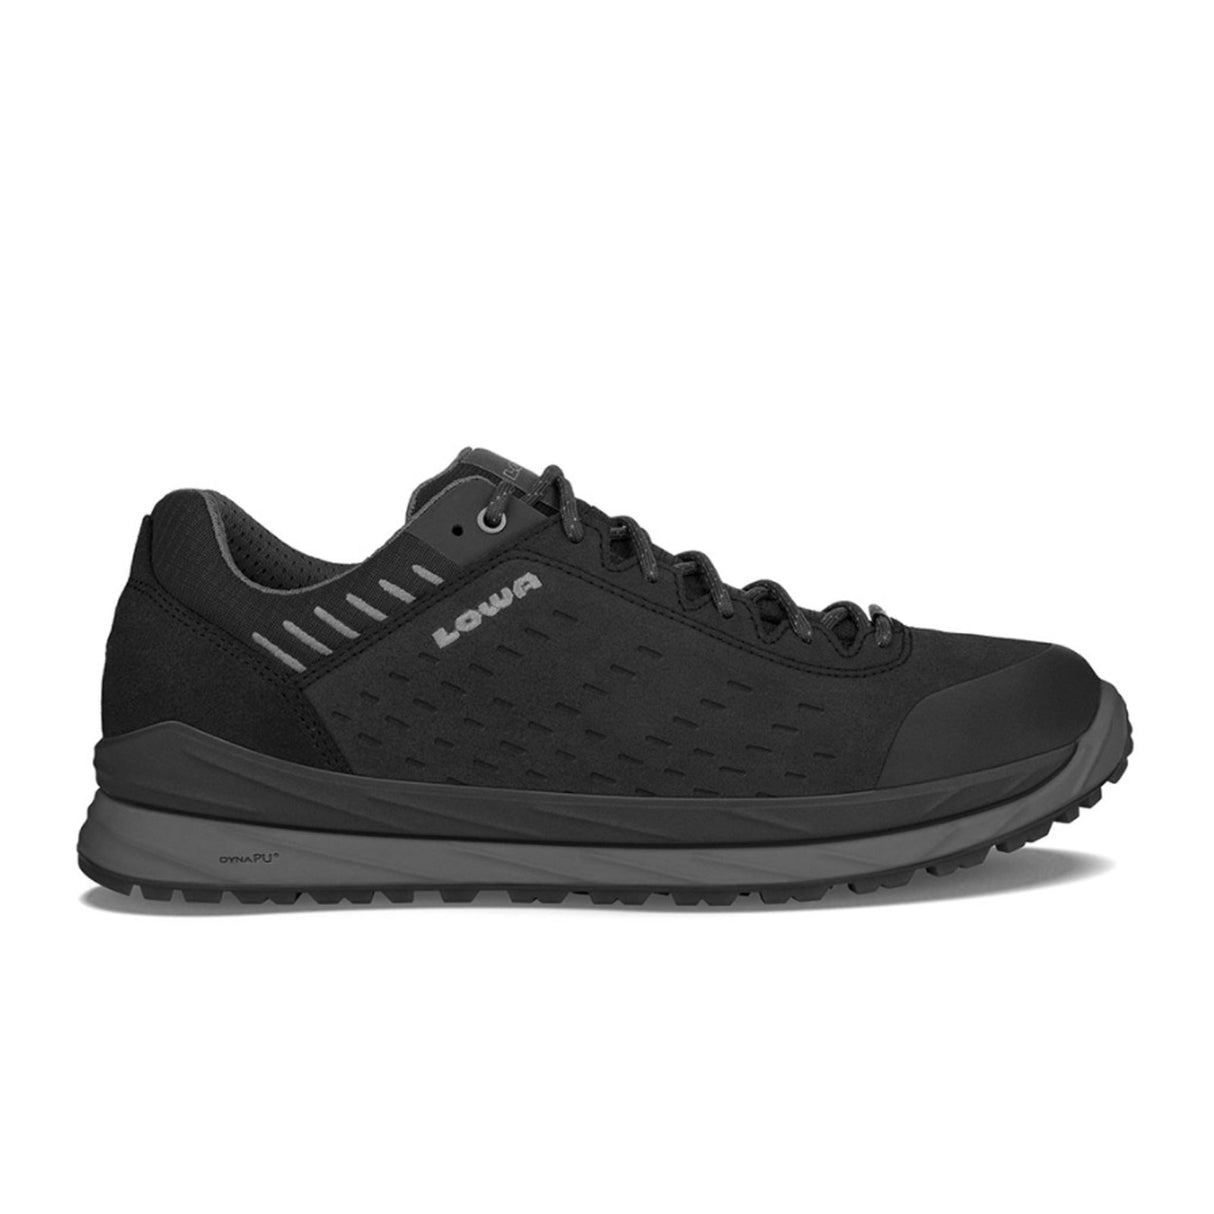 Lowa Malta GTX Lo Hiking Shoe (Men) - Black Hiking - Low - The Heel Shoe Fitters